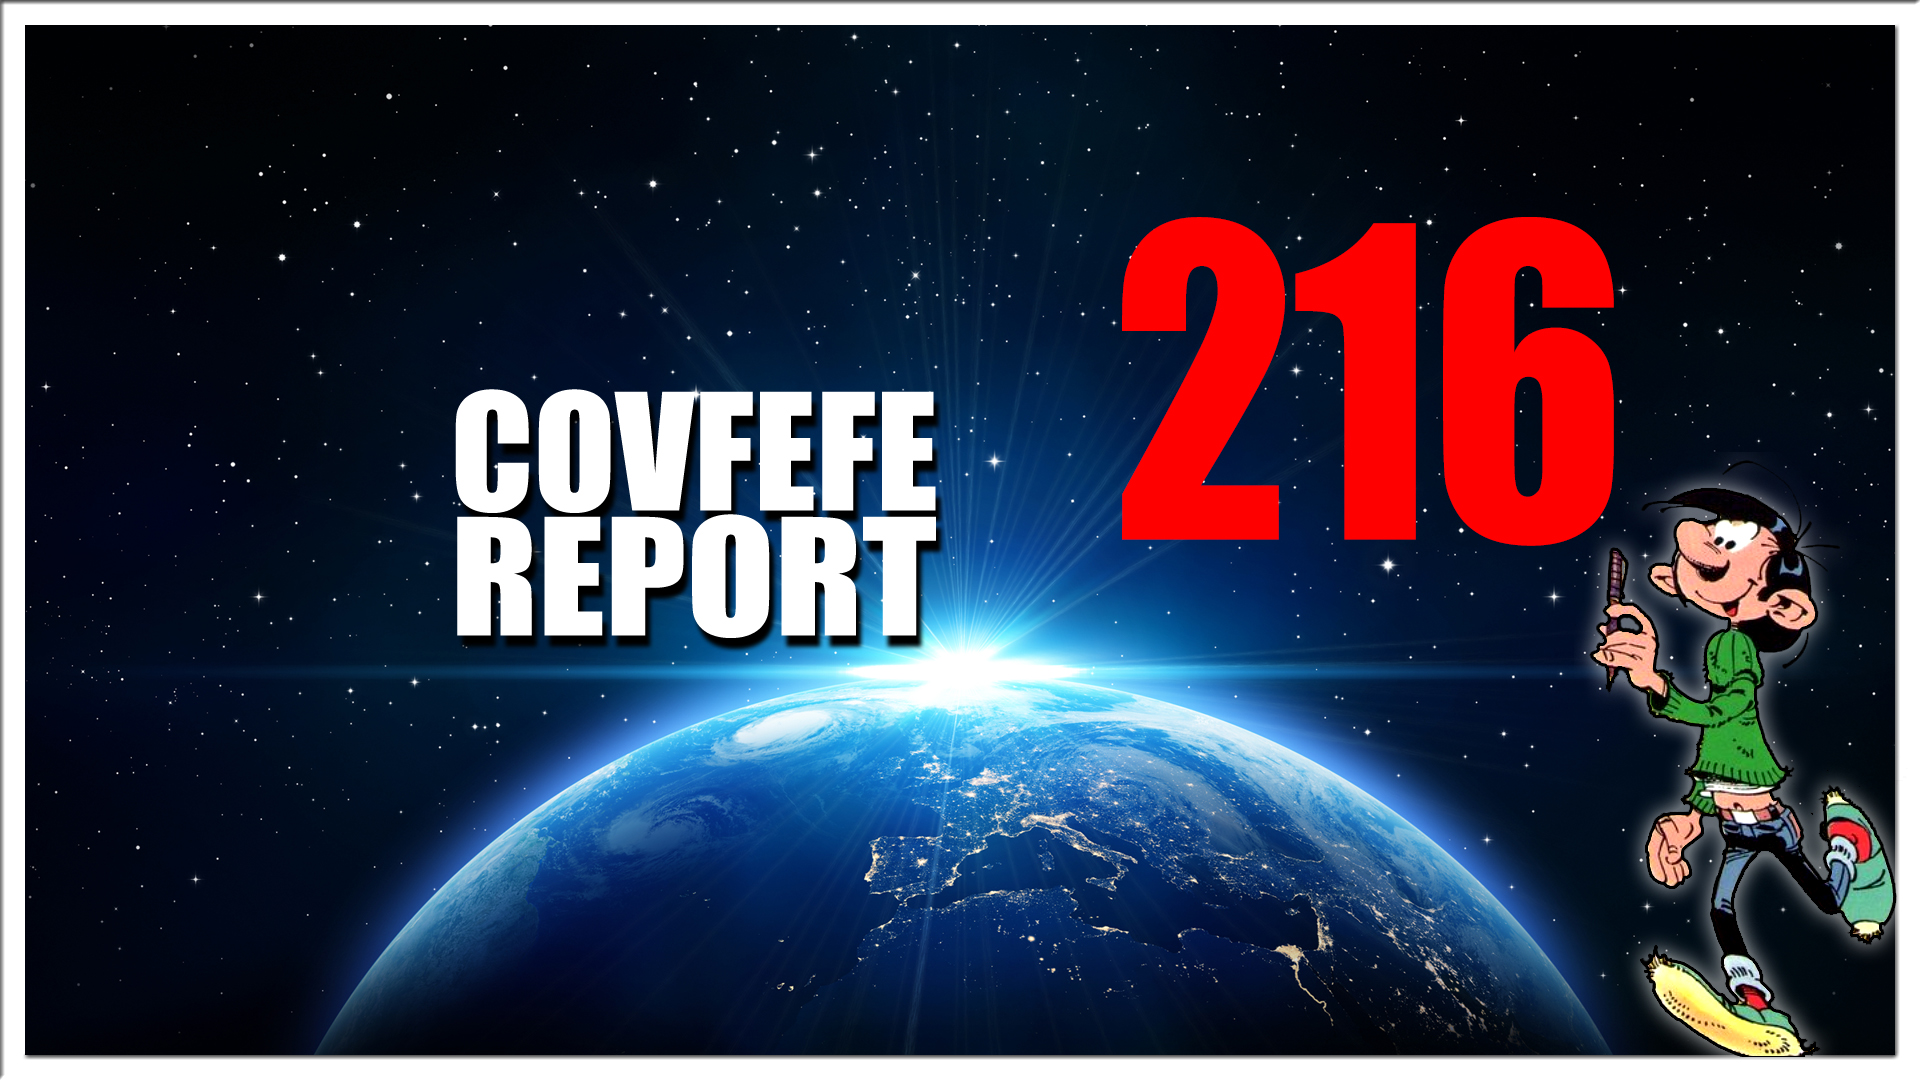 Covfefe Report 216. ngt